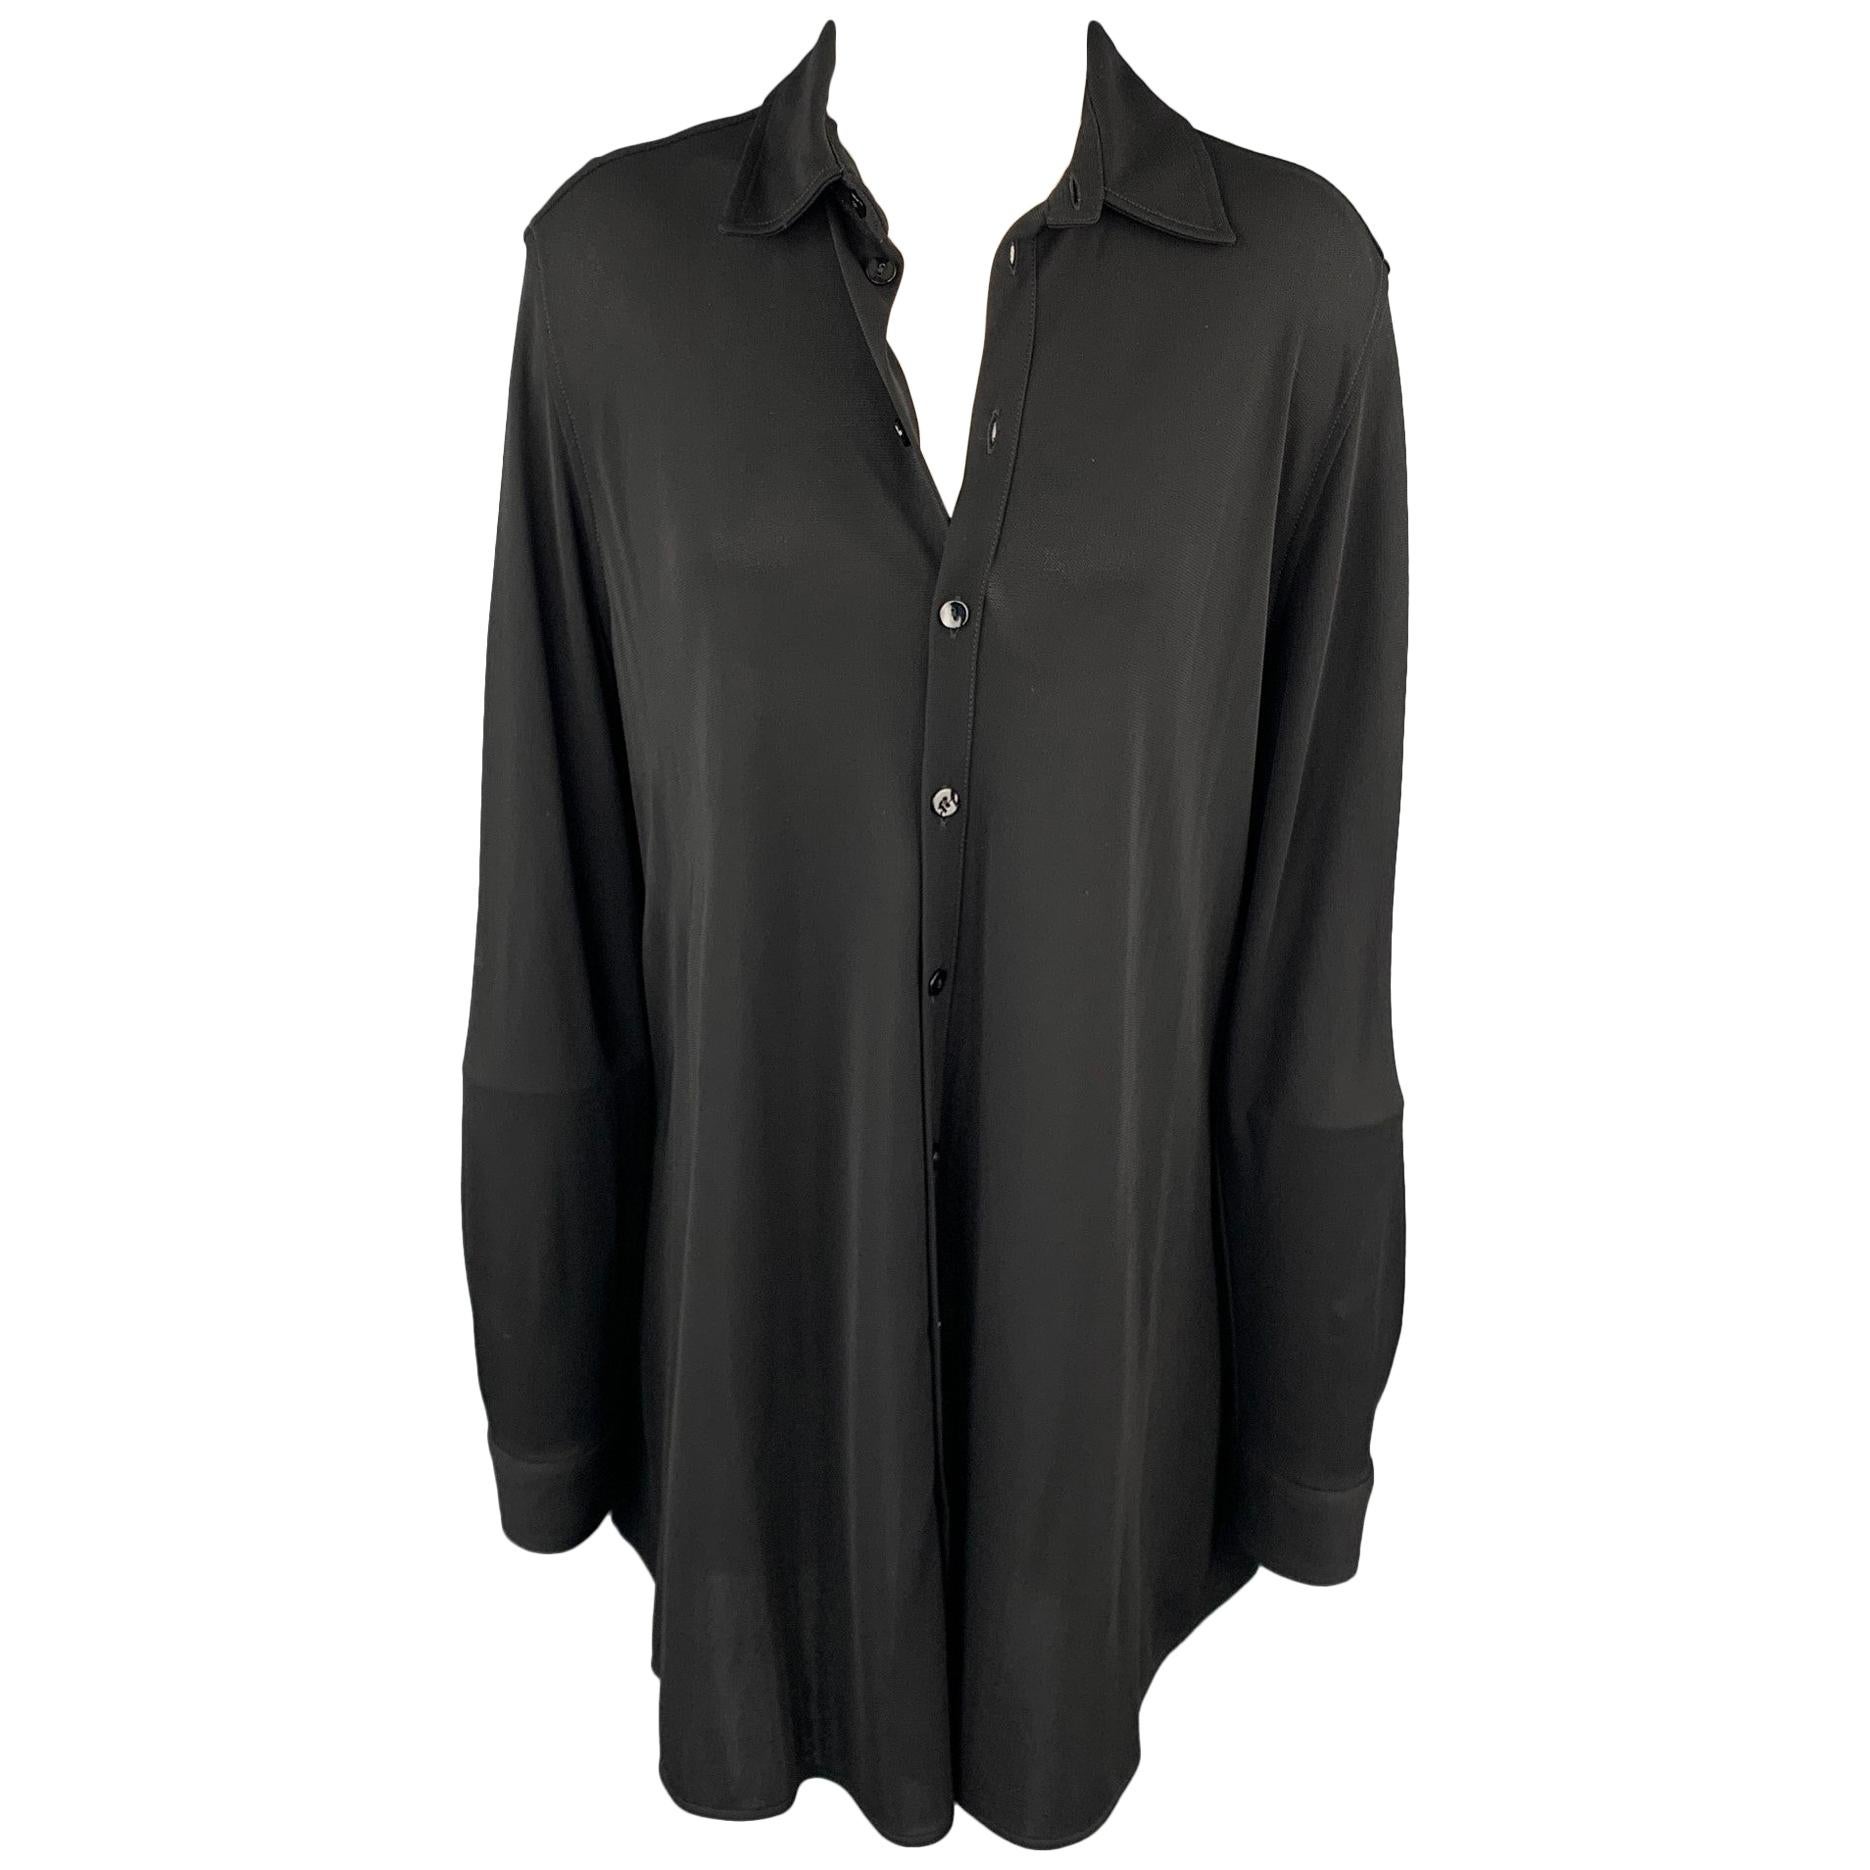 JEAN PAUL GAULTIER Size 8 Black Acetate Blend Button Up Shirt